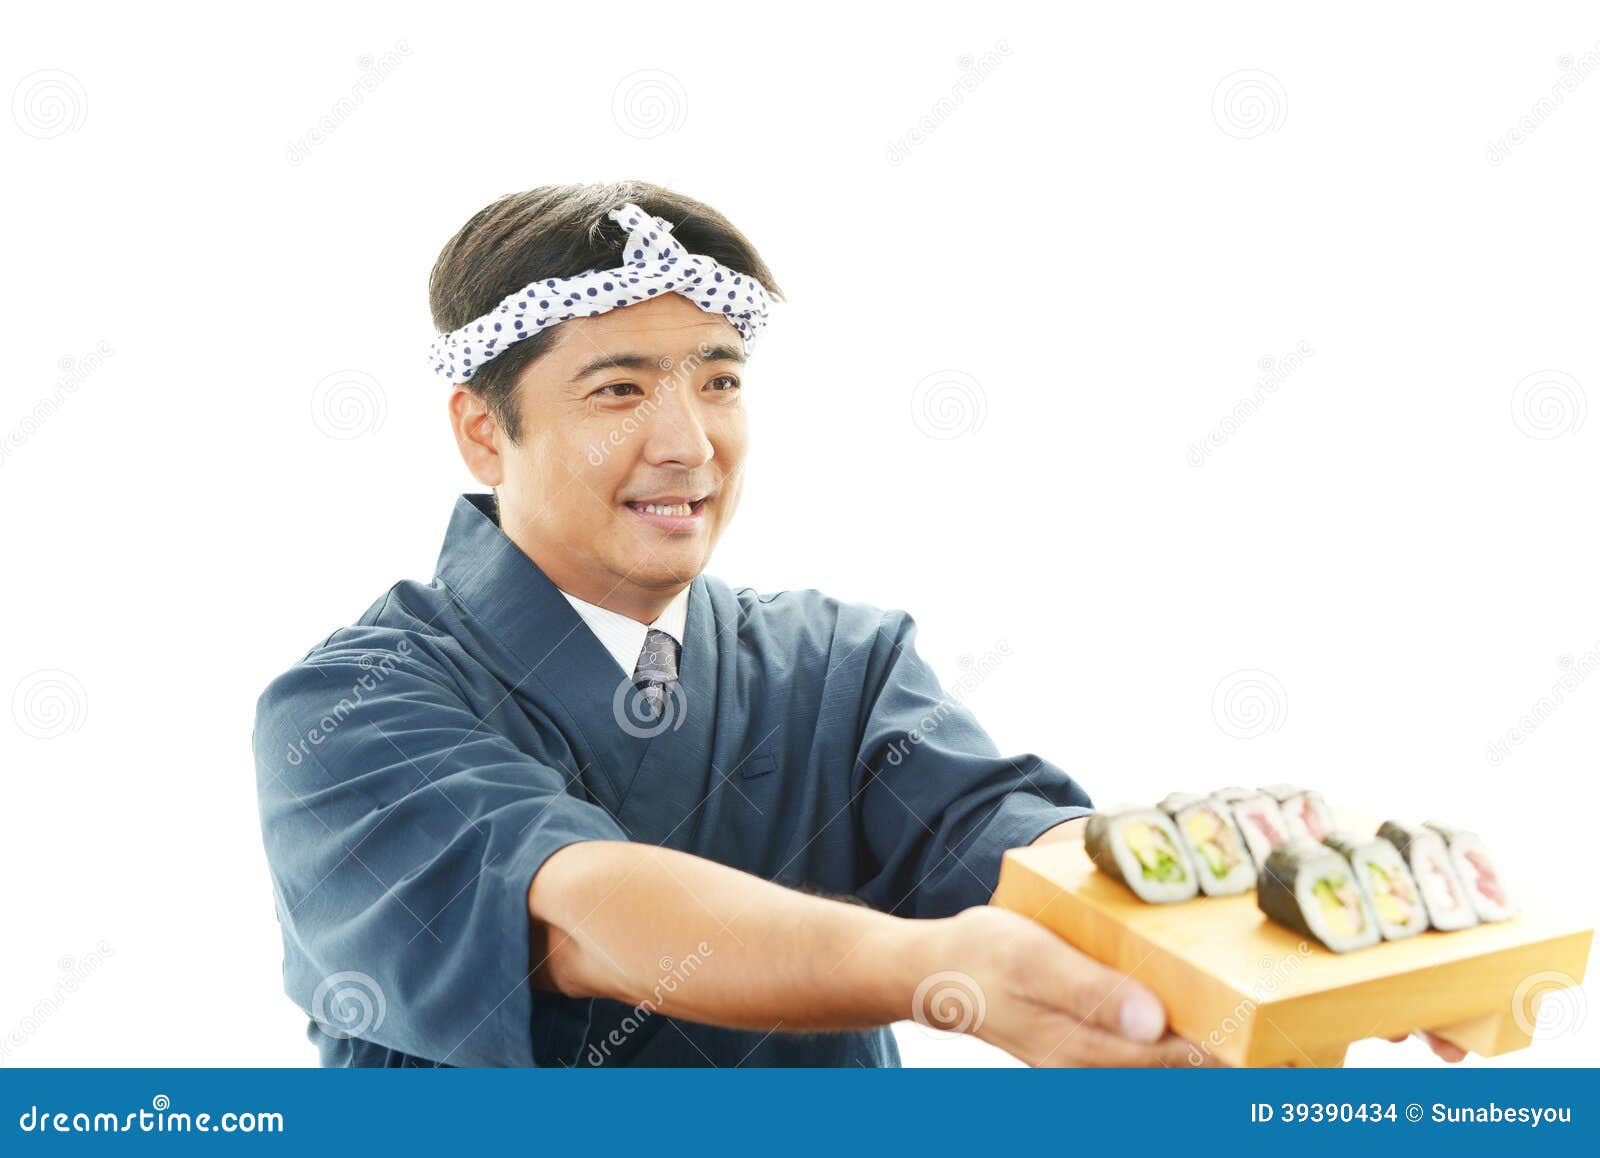 https://thumbs.dreamstime.com/z/smiling-japanese-chef-sushi-portrait-39390434.jpg